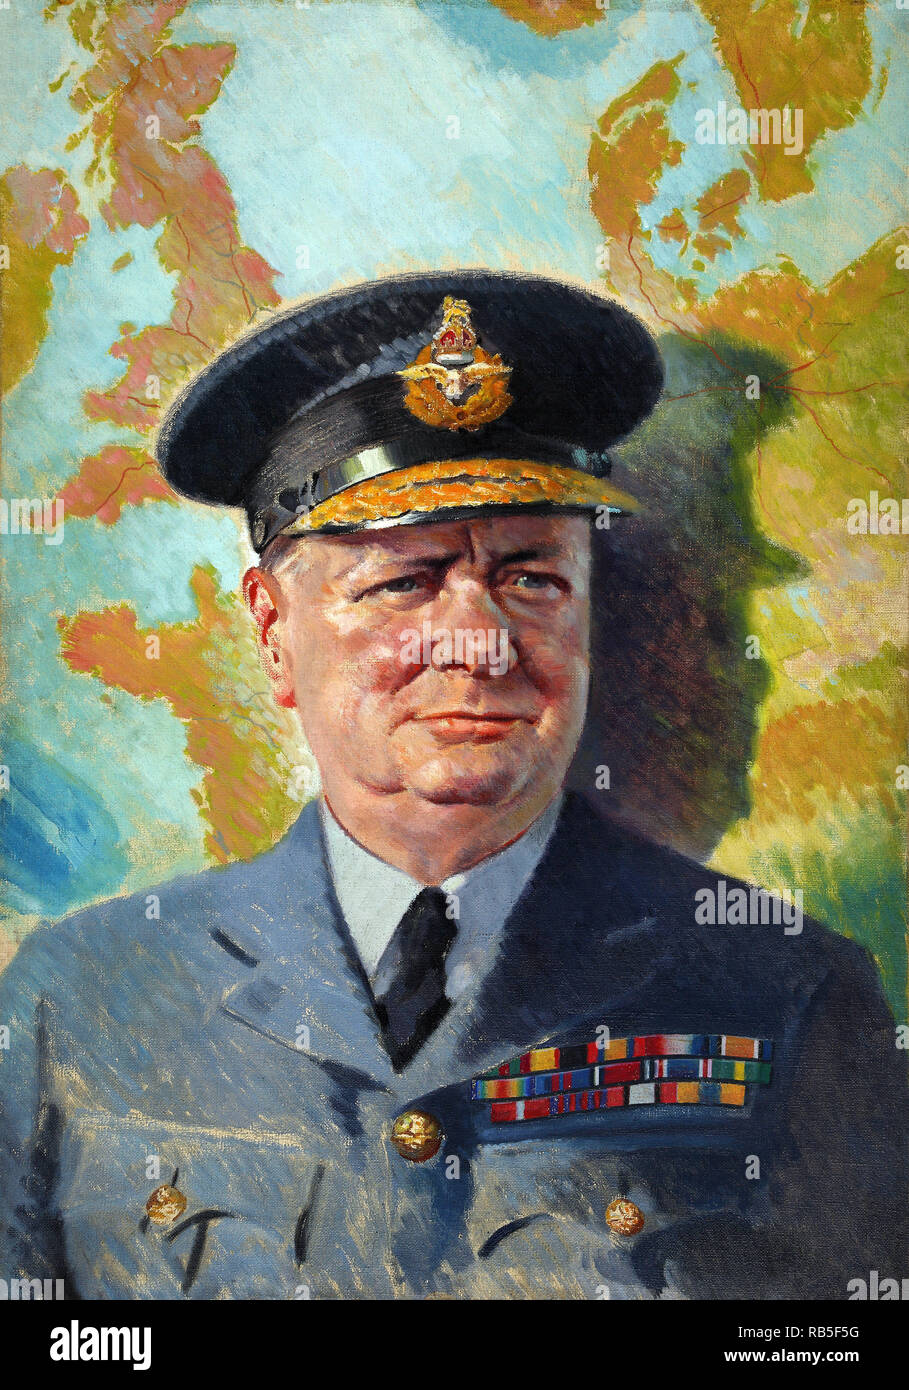 Painting of Winston Churchill in RAF uniform Stock Photo